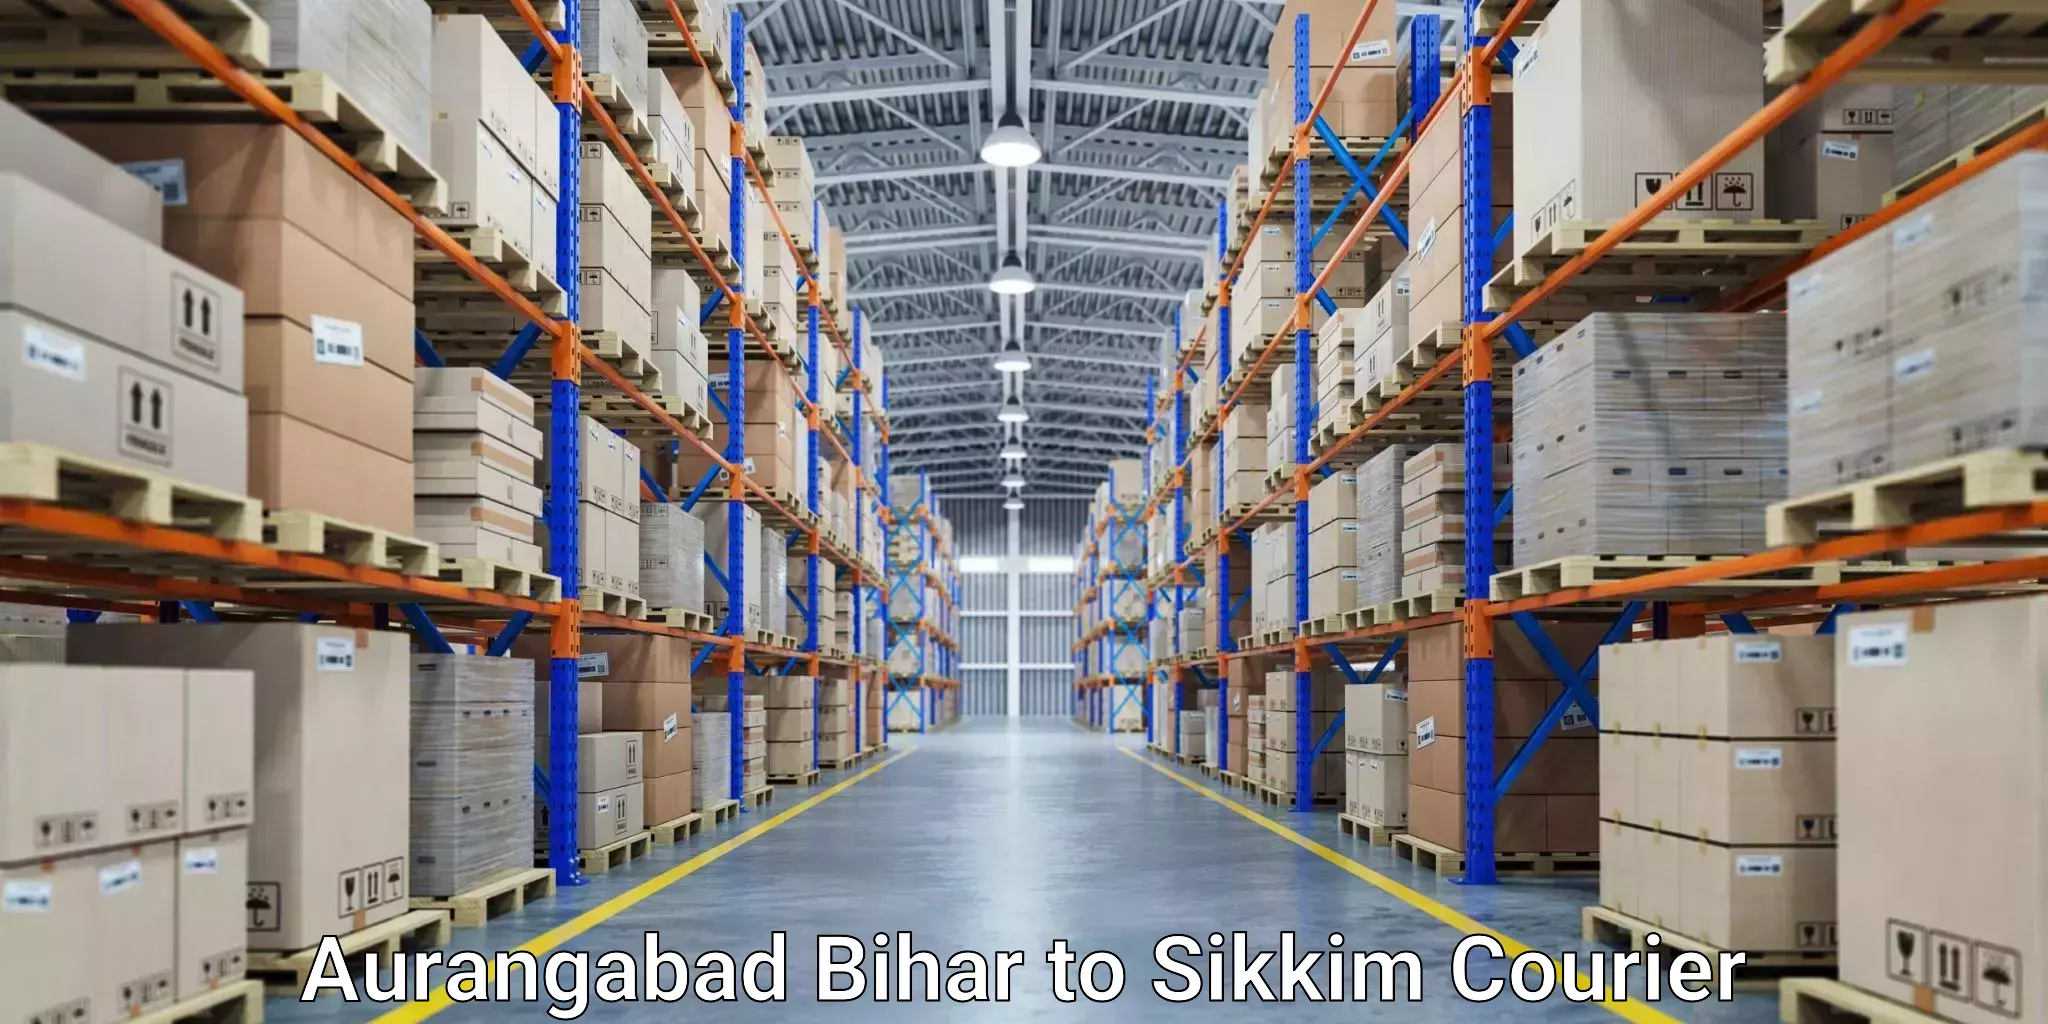 Same-day delivery solutions Aurangabad Bihar to Sikkim